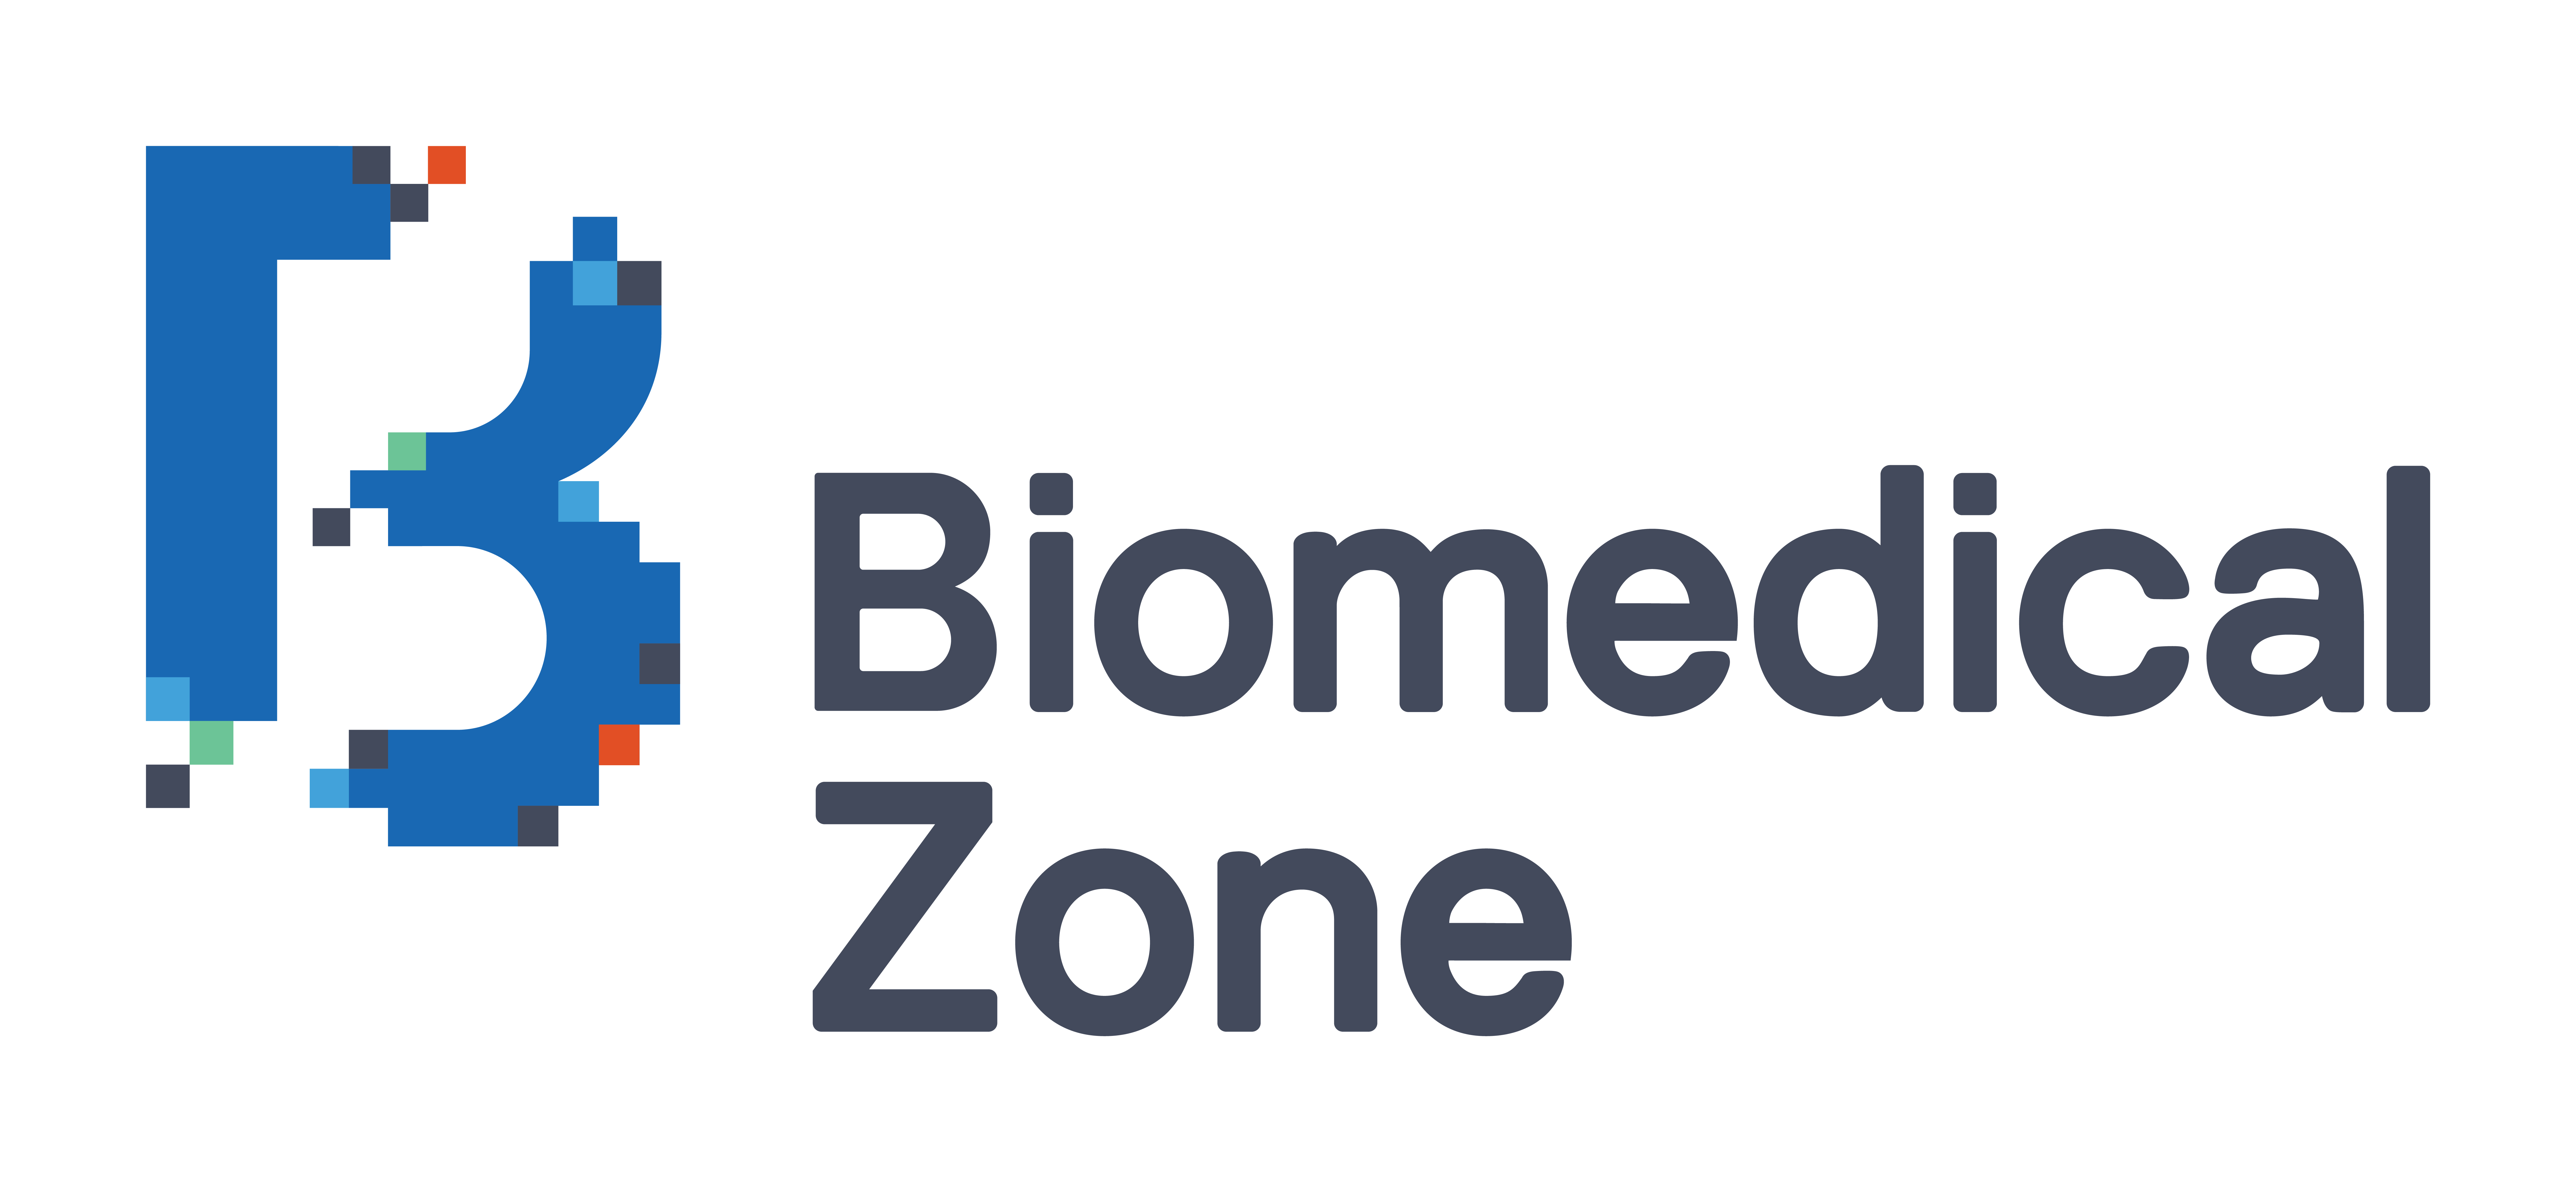 Biomedical Zone logo